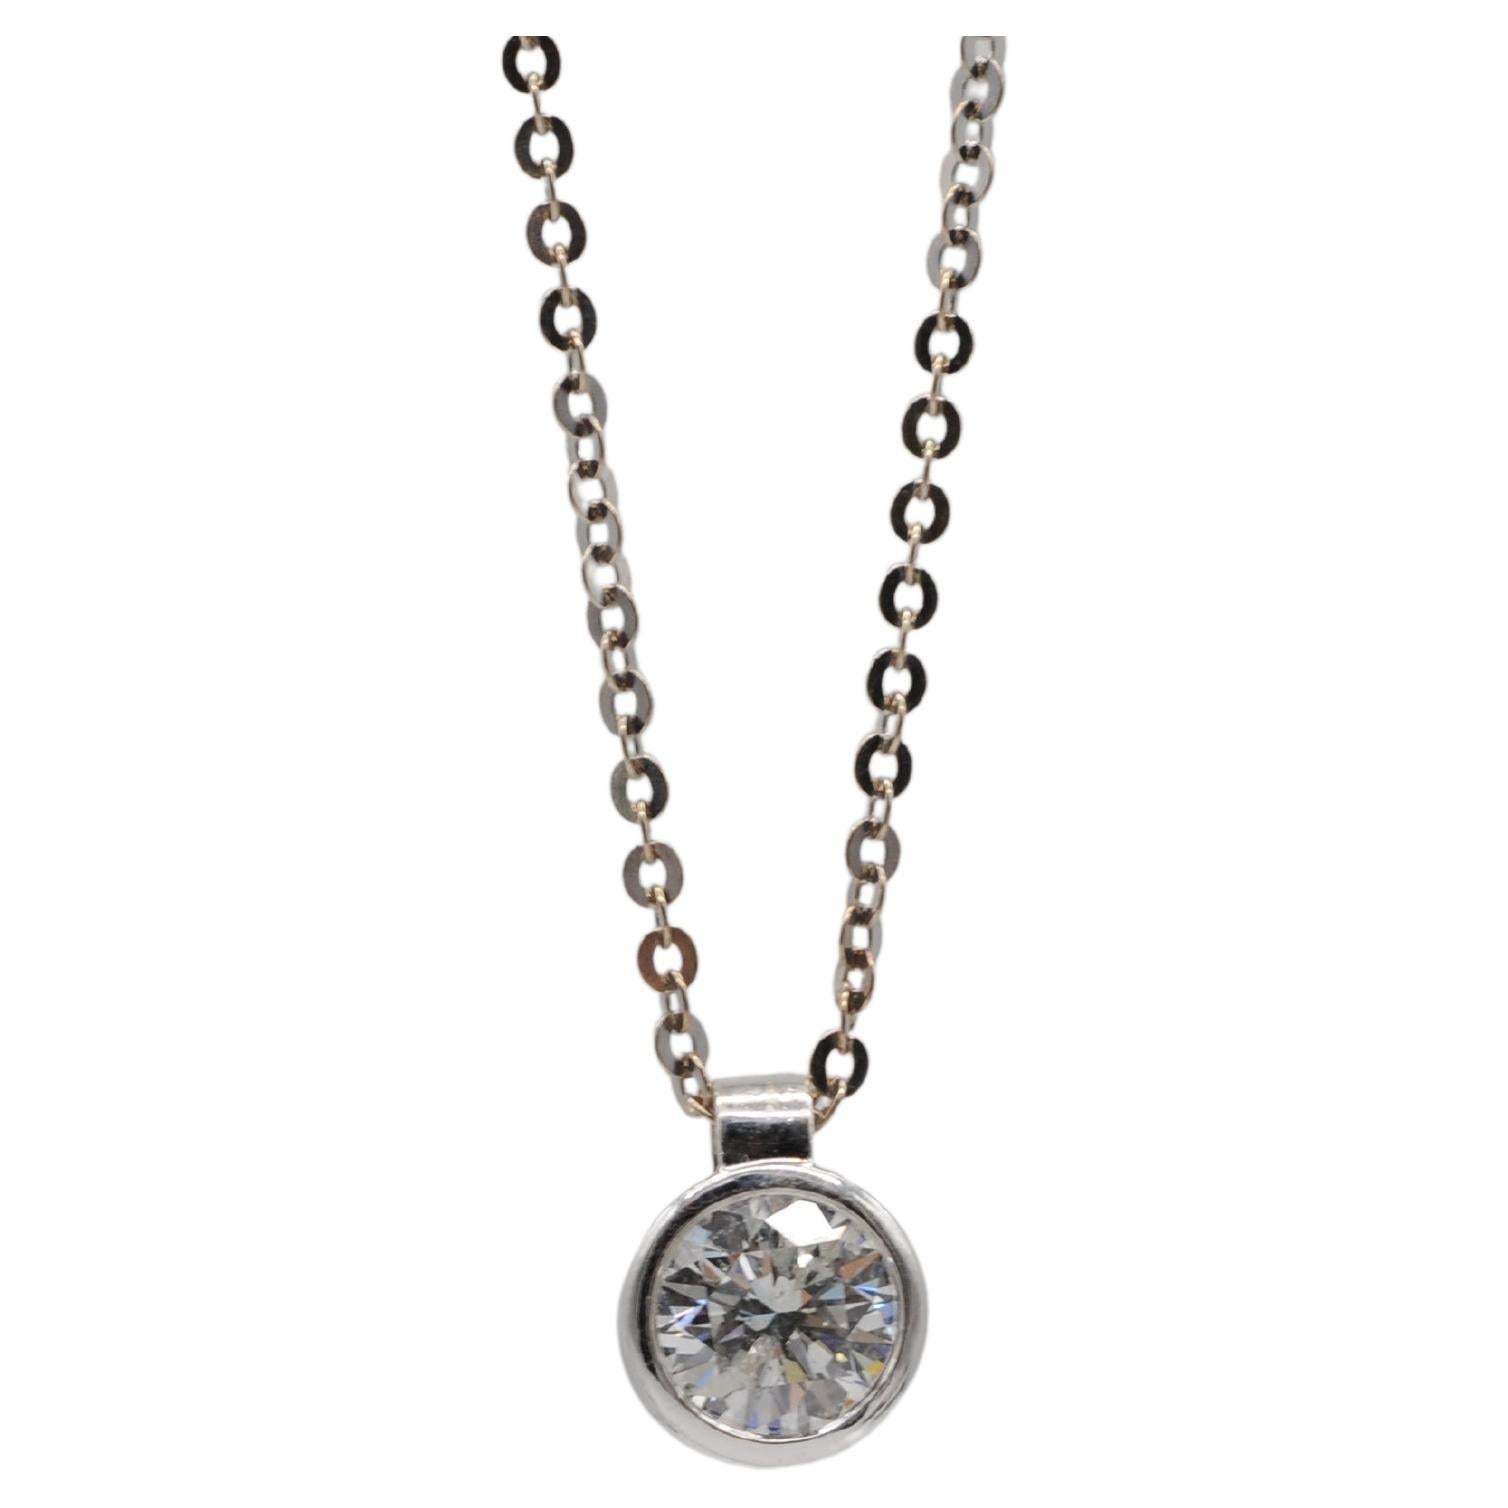  Diamond ca:1.5ct necklace in 18k whitegold